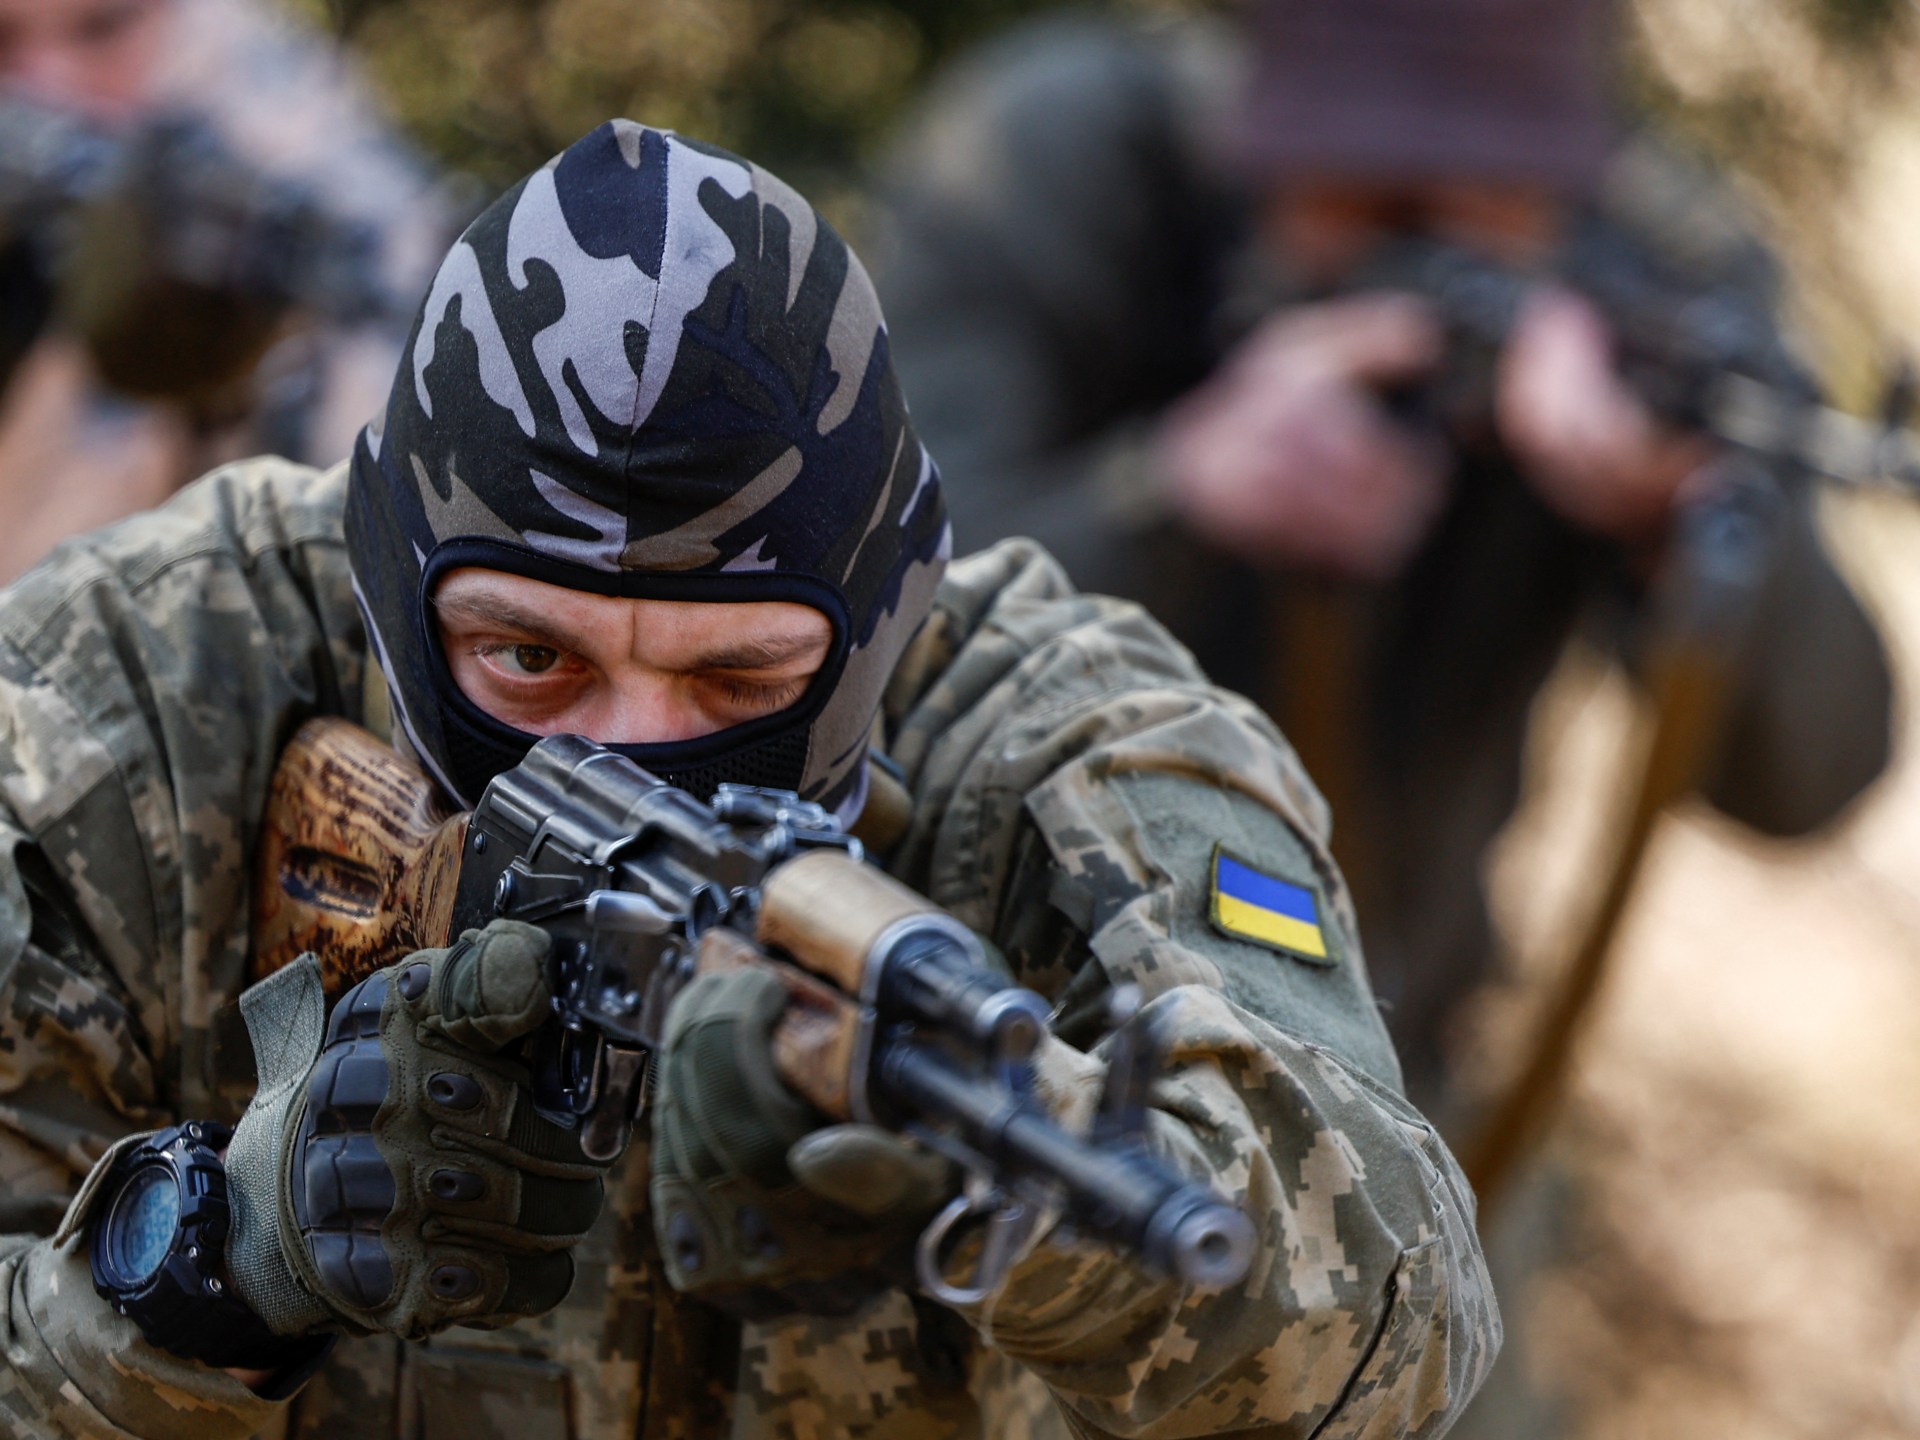 Ukraine wins bipartisan US support, strikes Russia from afar | Russia-Ukraine war News